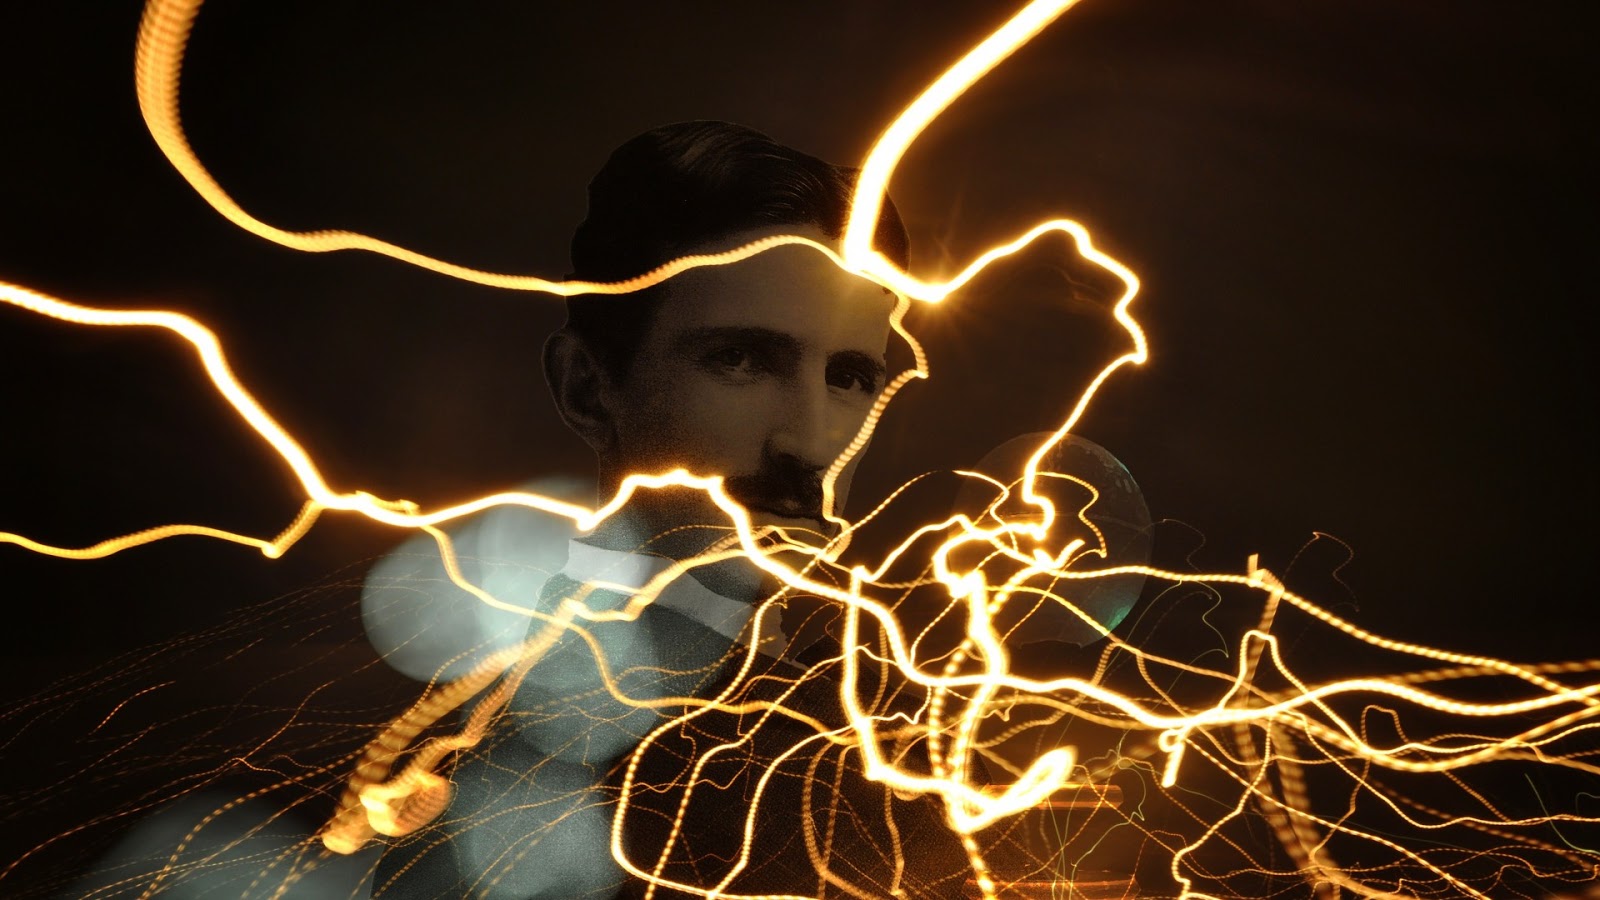 Nikola Tesla Coil Wallpaper Image Pictures Becuo